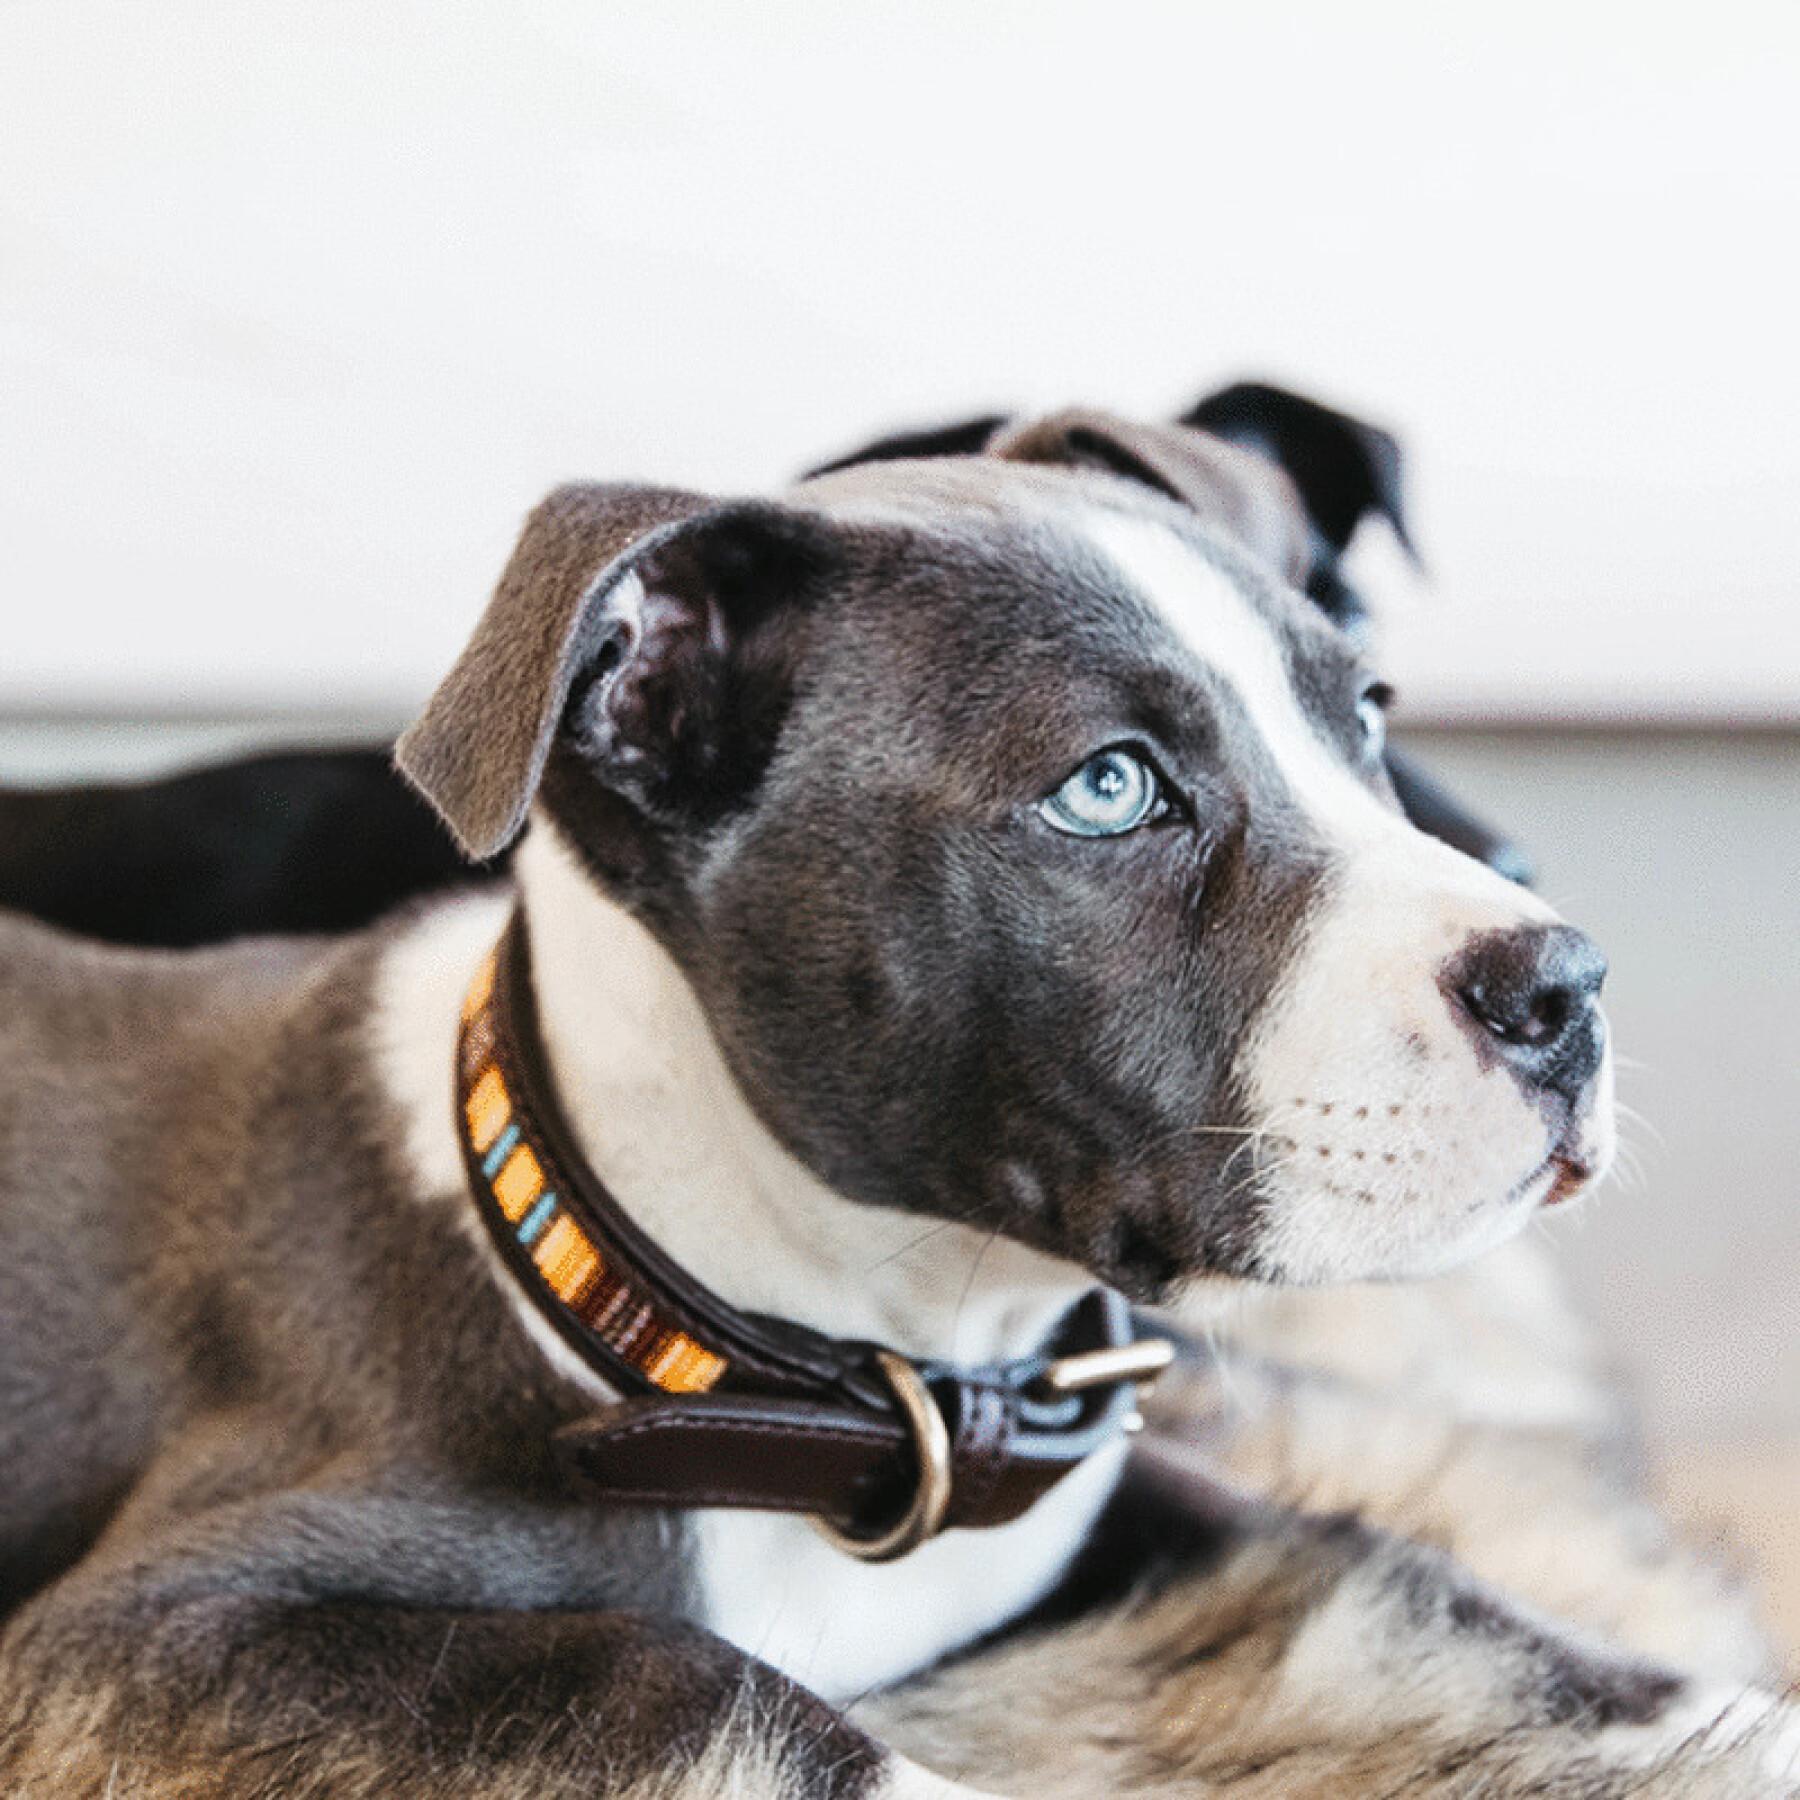 Dog collar with handmade beads Kentucky